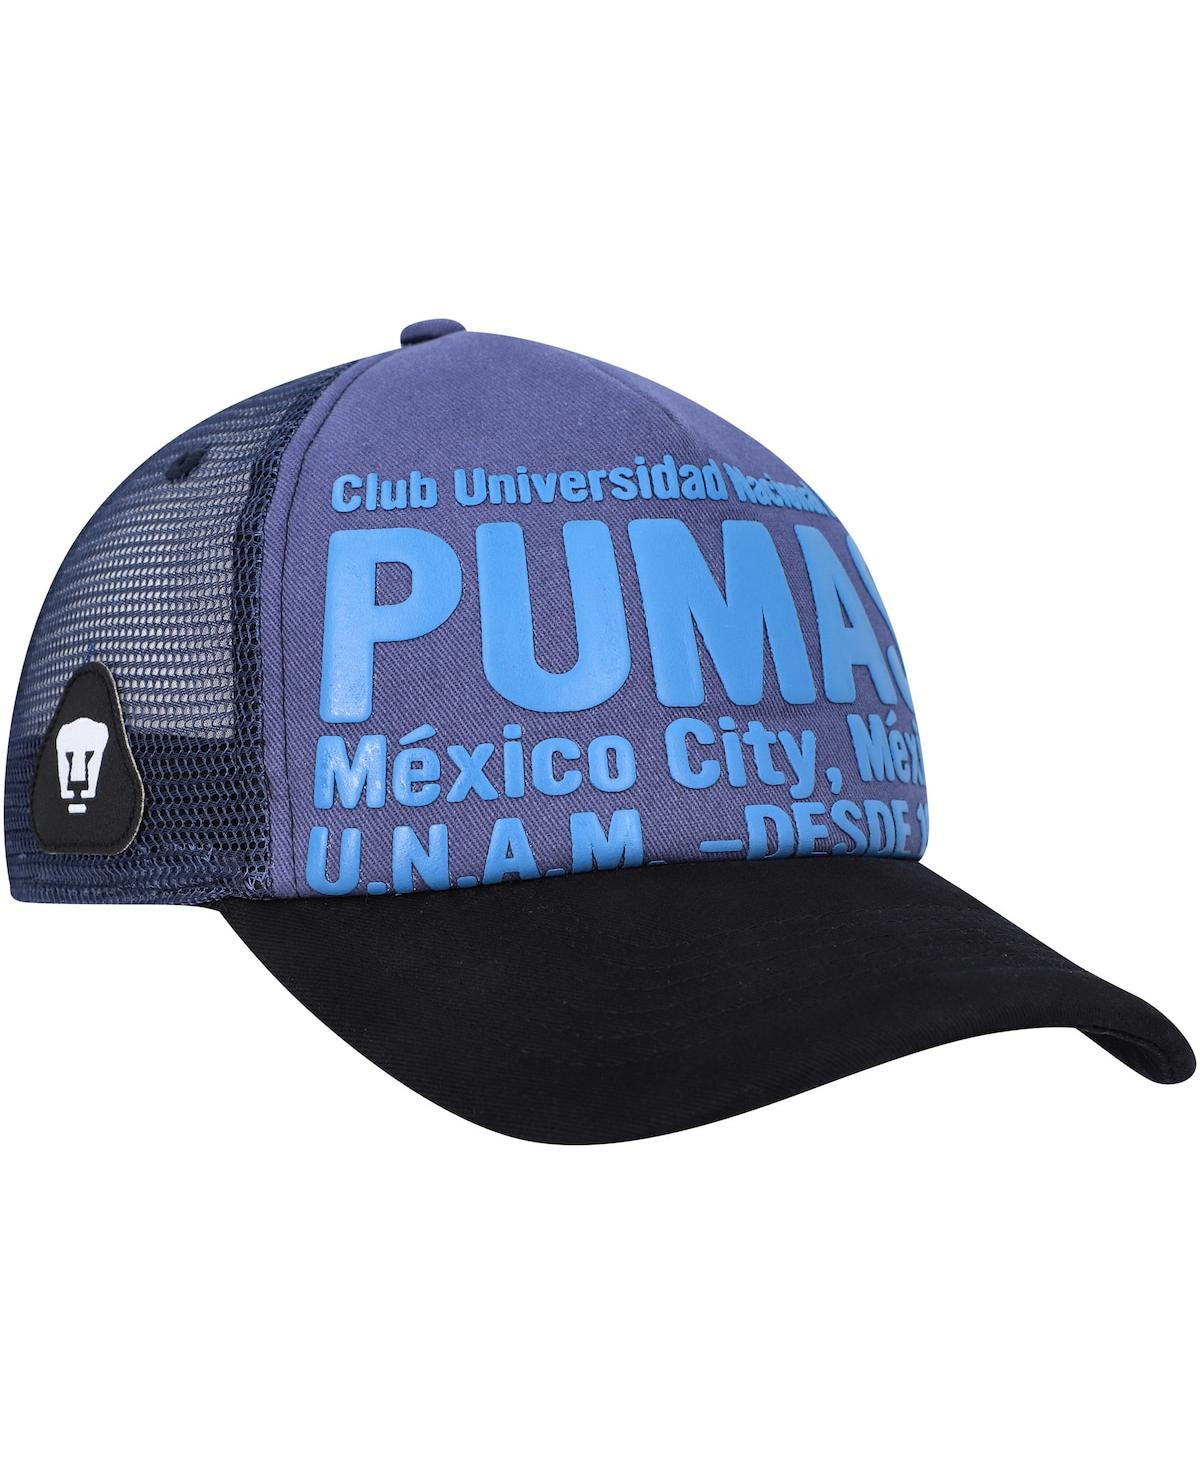 Shop Fan Ink Men's Navy Pumas Club Gold Adjustable Hat